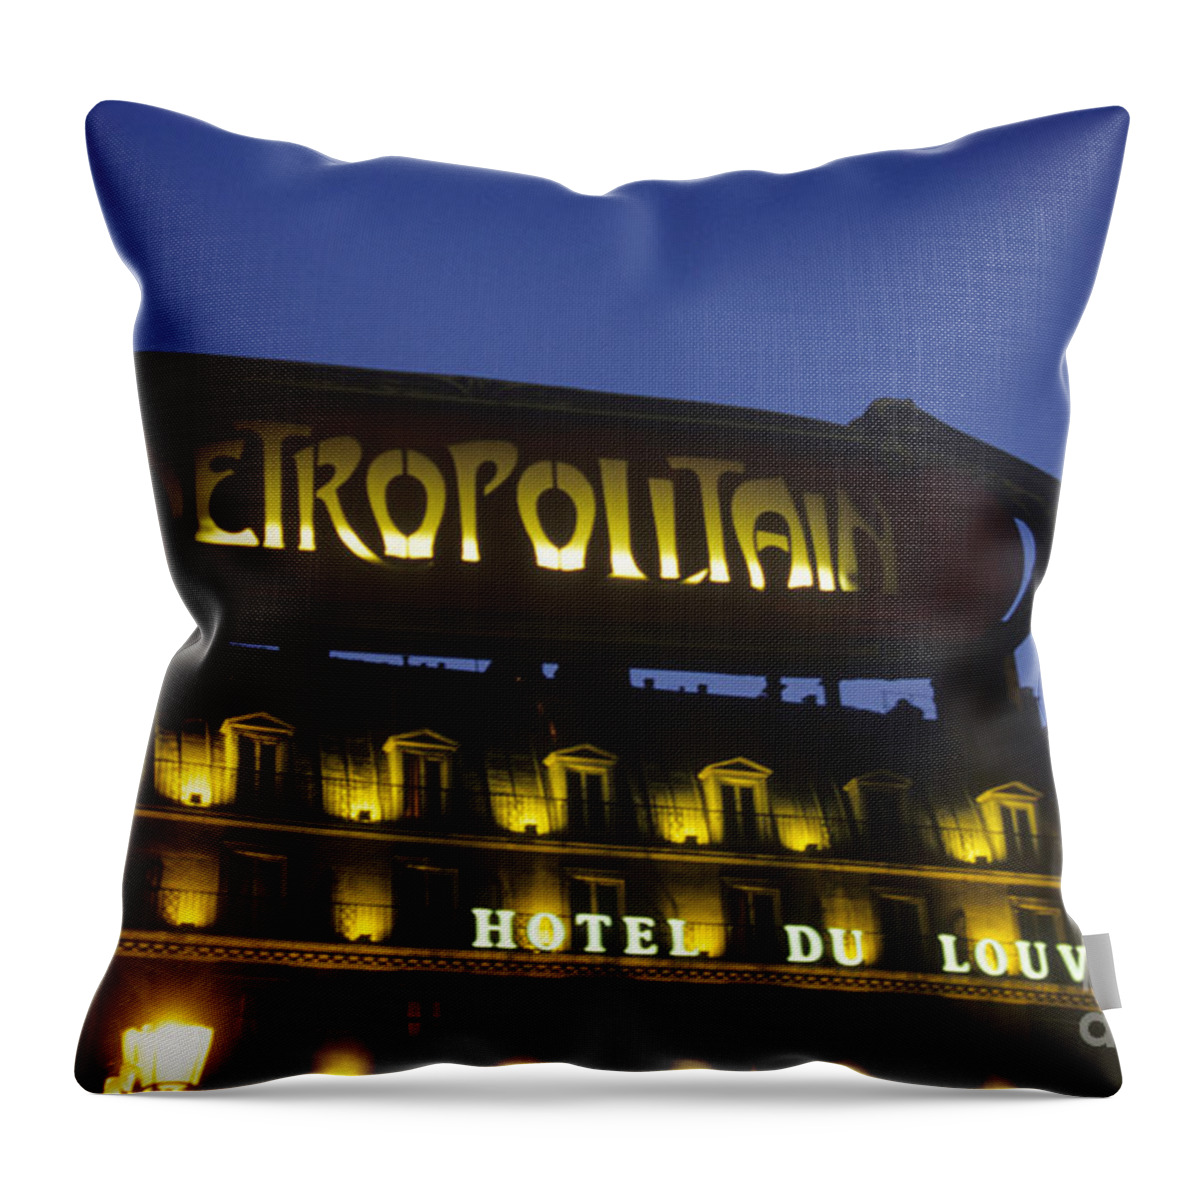 Europe Throw Pillow featuring the photograph Metro Sign. Paris. France by Bernard Jaubert